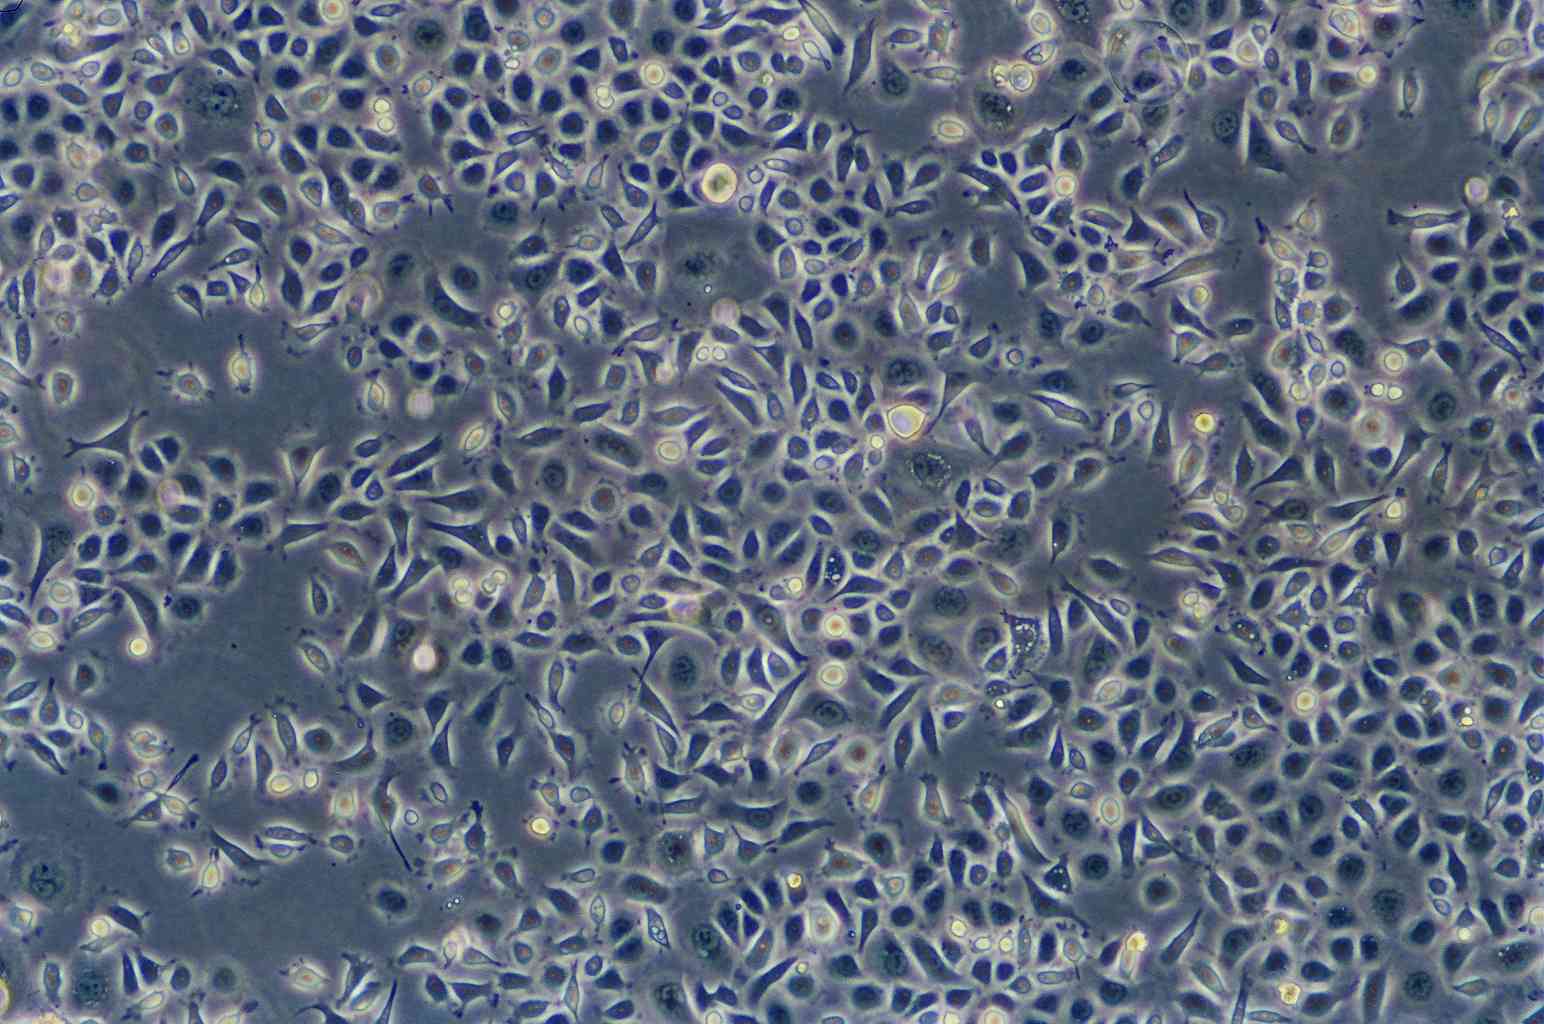 KYSE-150 Cells(赠送Str鉴定报告)|人食管鳞癌细胞